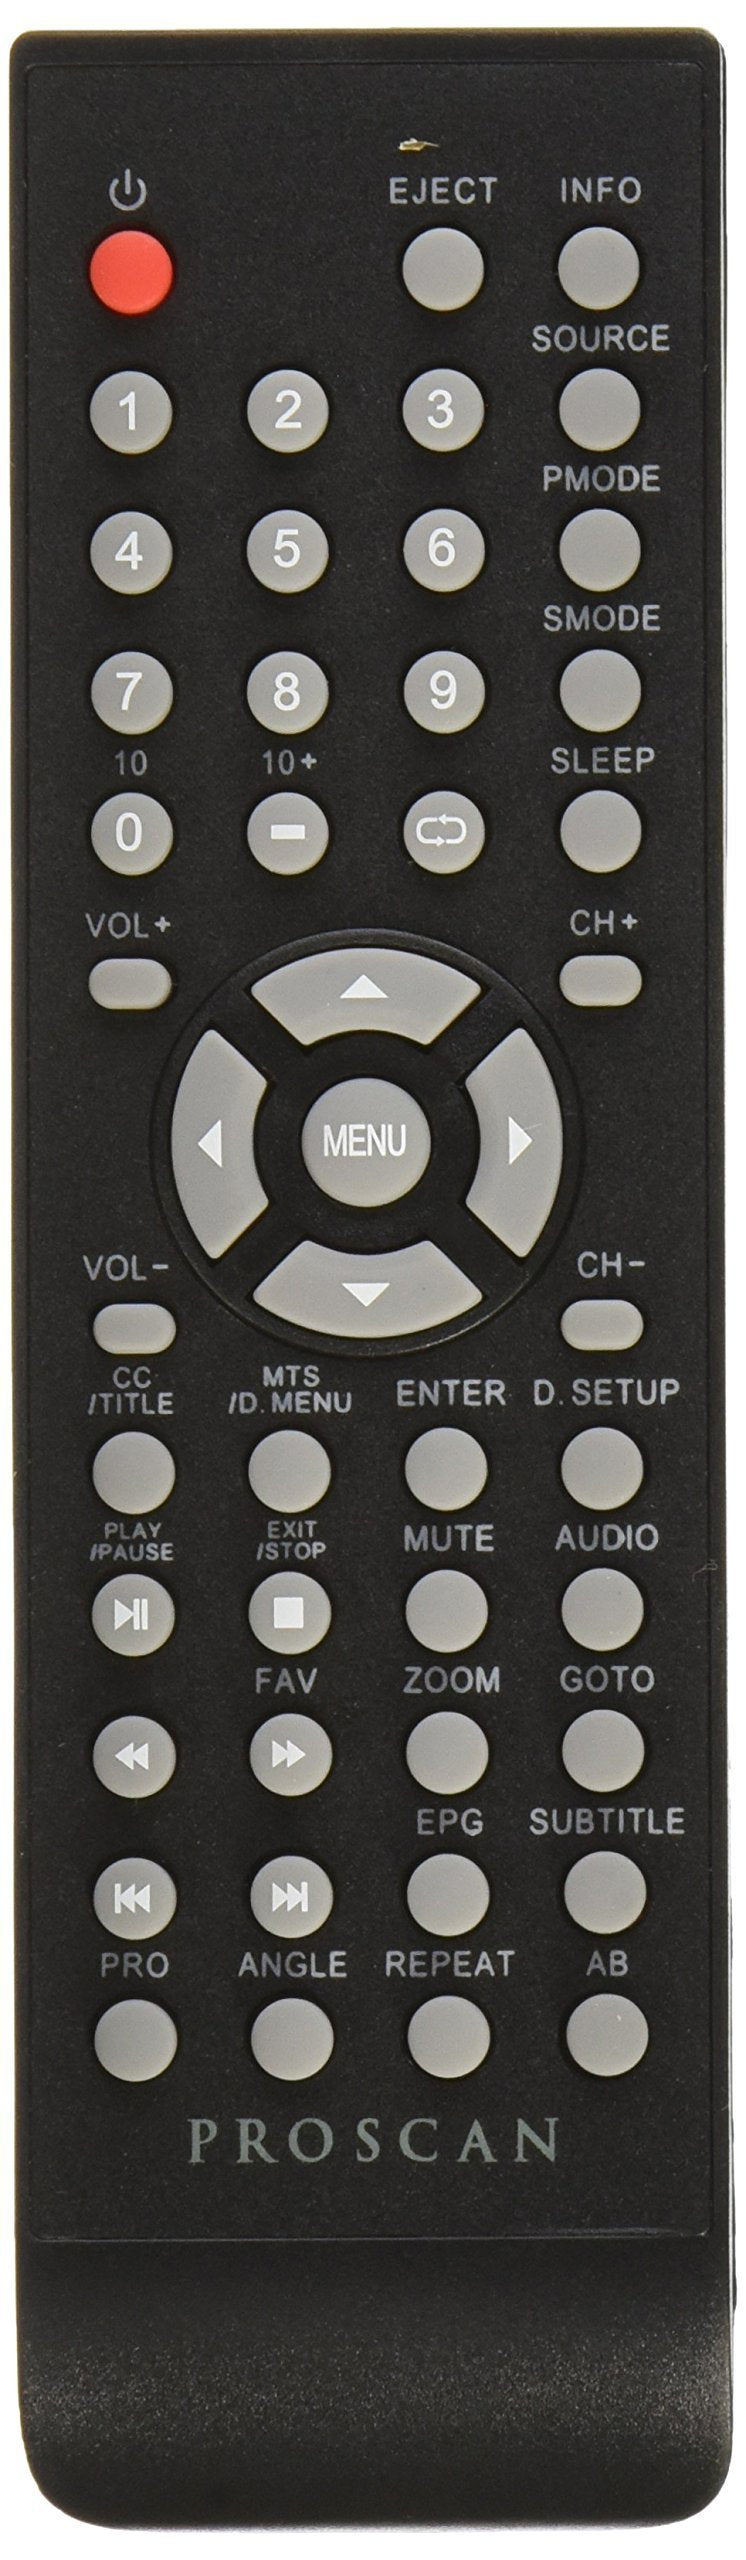 Remote Control Replacement for PROSCAN DVD Comb LCD LED TV PLCDV3213A PLDVD3213A PLEDV2845A PLDEDV3292A-B PLCDV3247A-C PLDEDV3292-A PLCDV3247A-C PLEDV2845A PLDEDV3292-A PLCDV3213A PLDVD3213A Comb TV